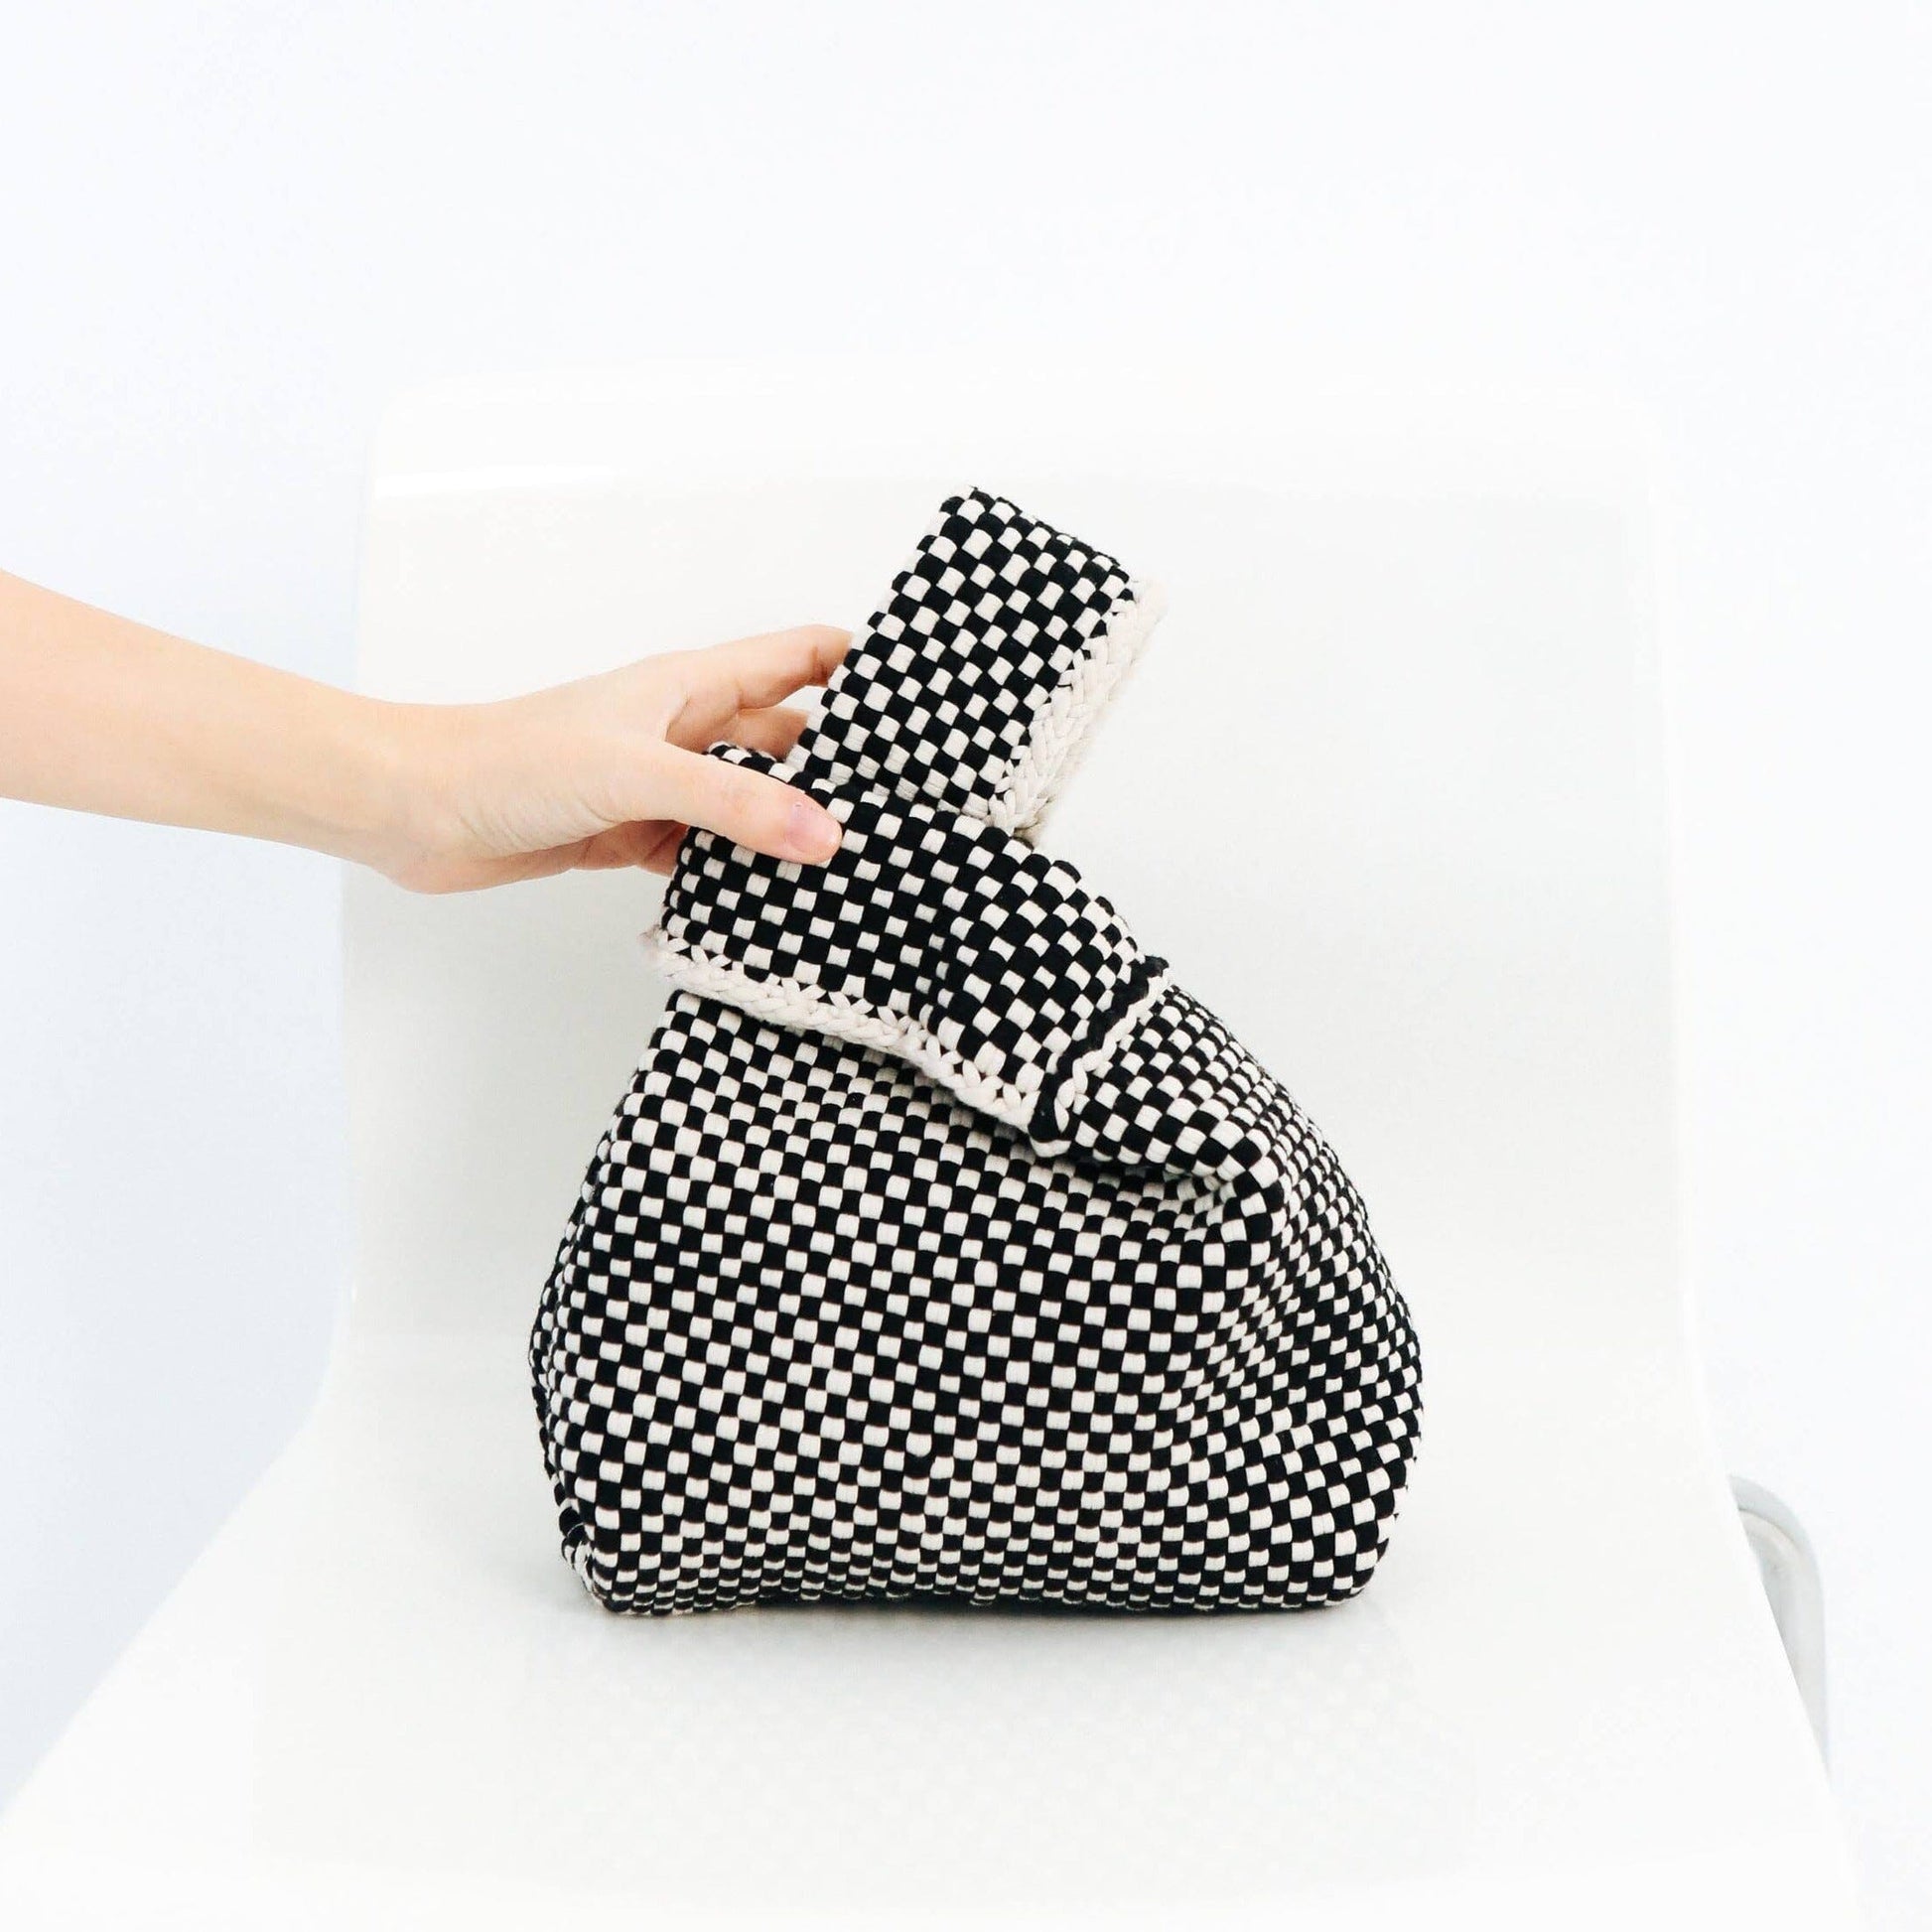 [R2R x OPPO] Loop Bag by Pam Quiñones Fashion Rags2Riches